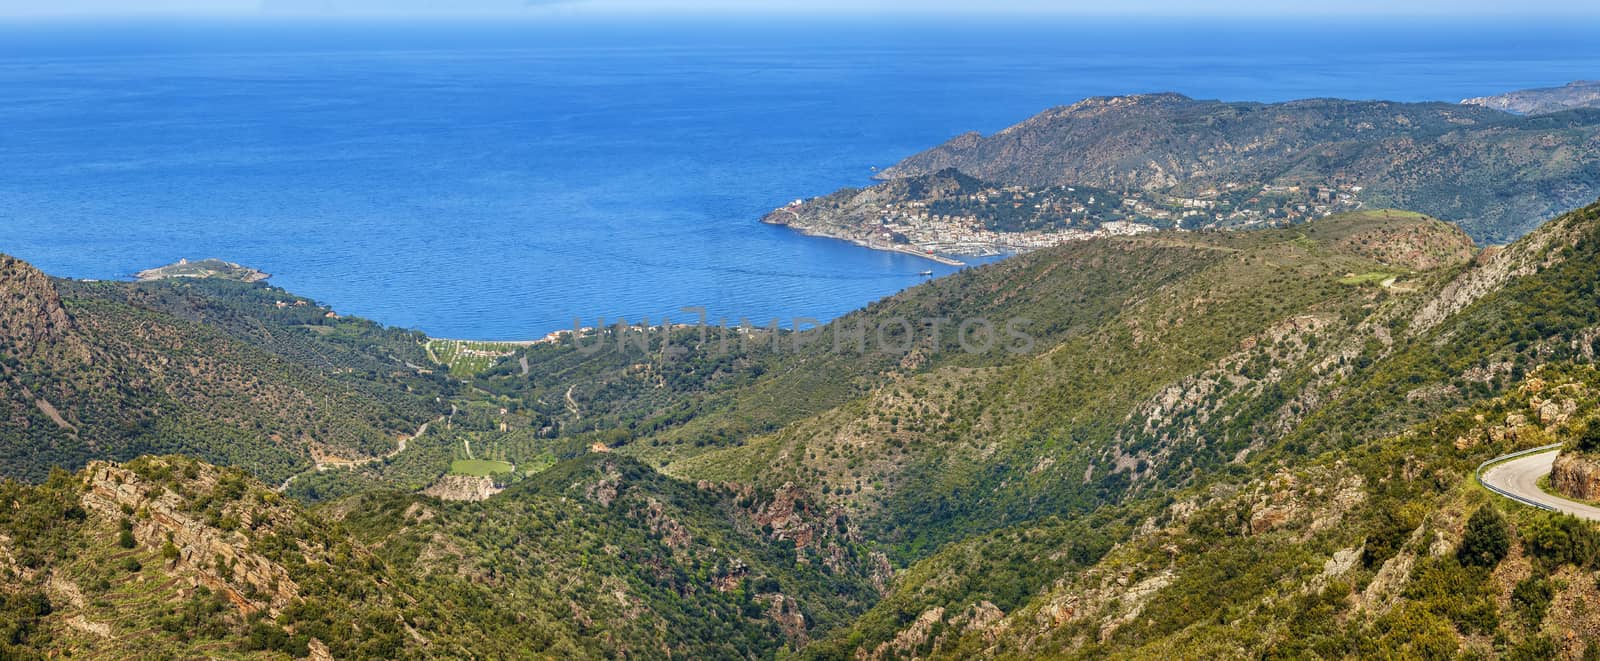 Panoramic view of mountain range Serra de Rodes with sea, Spain